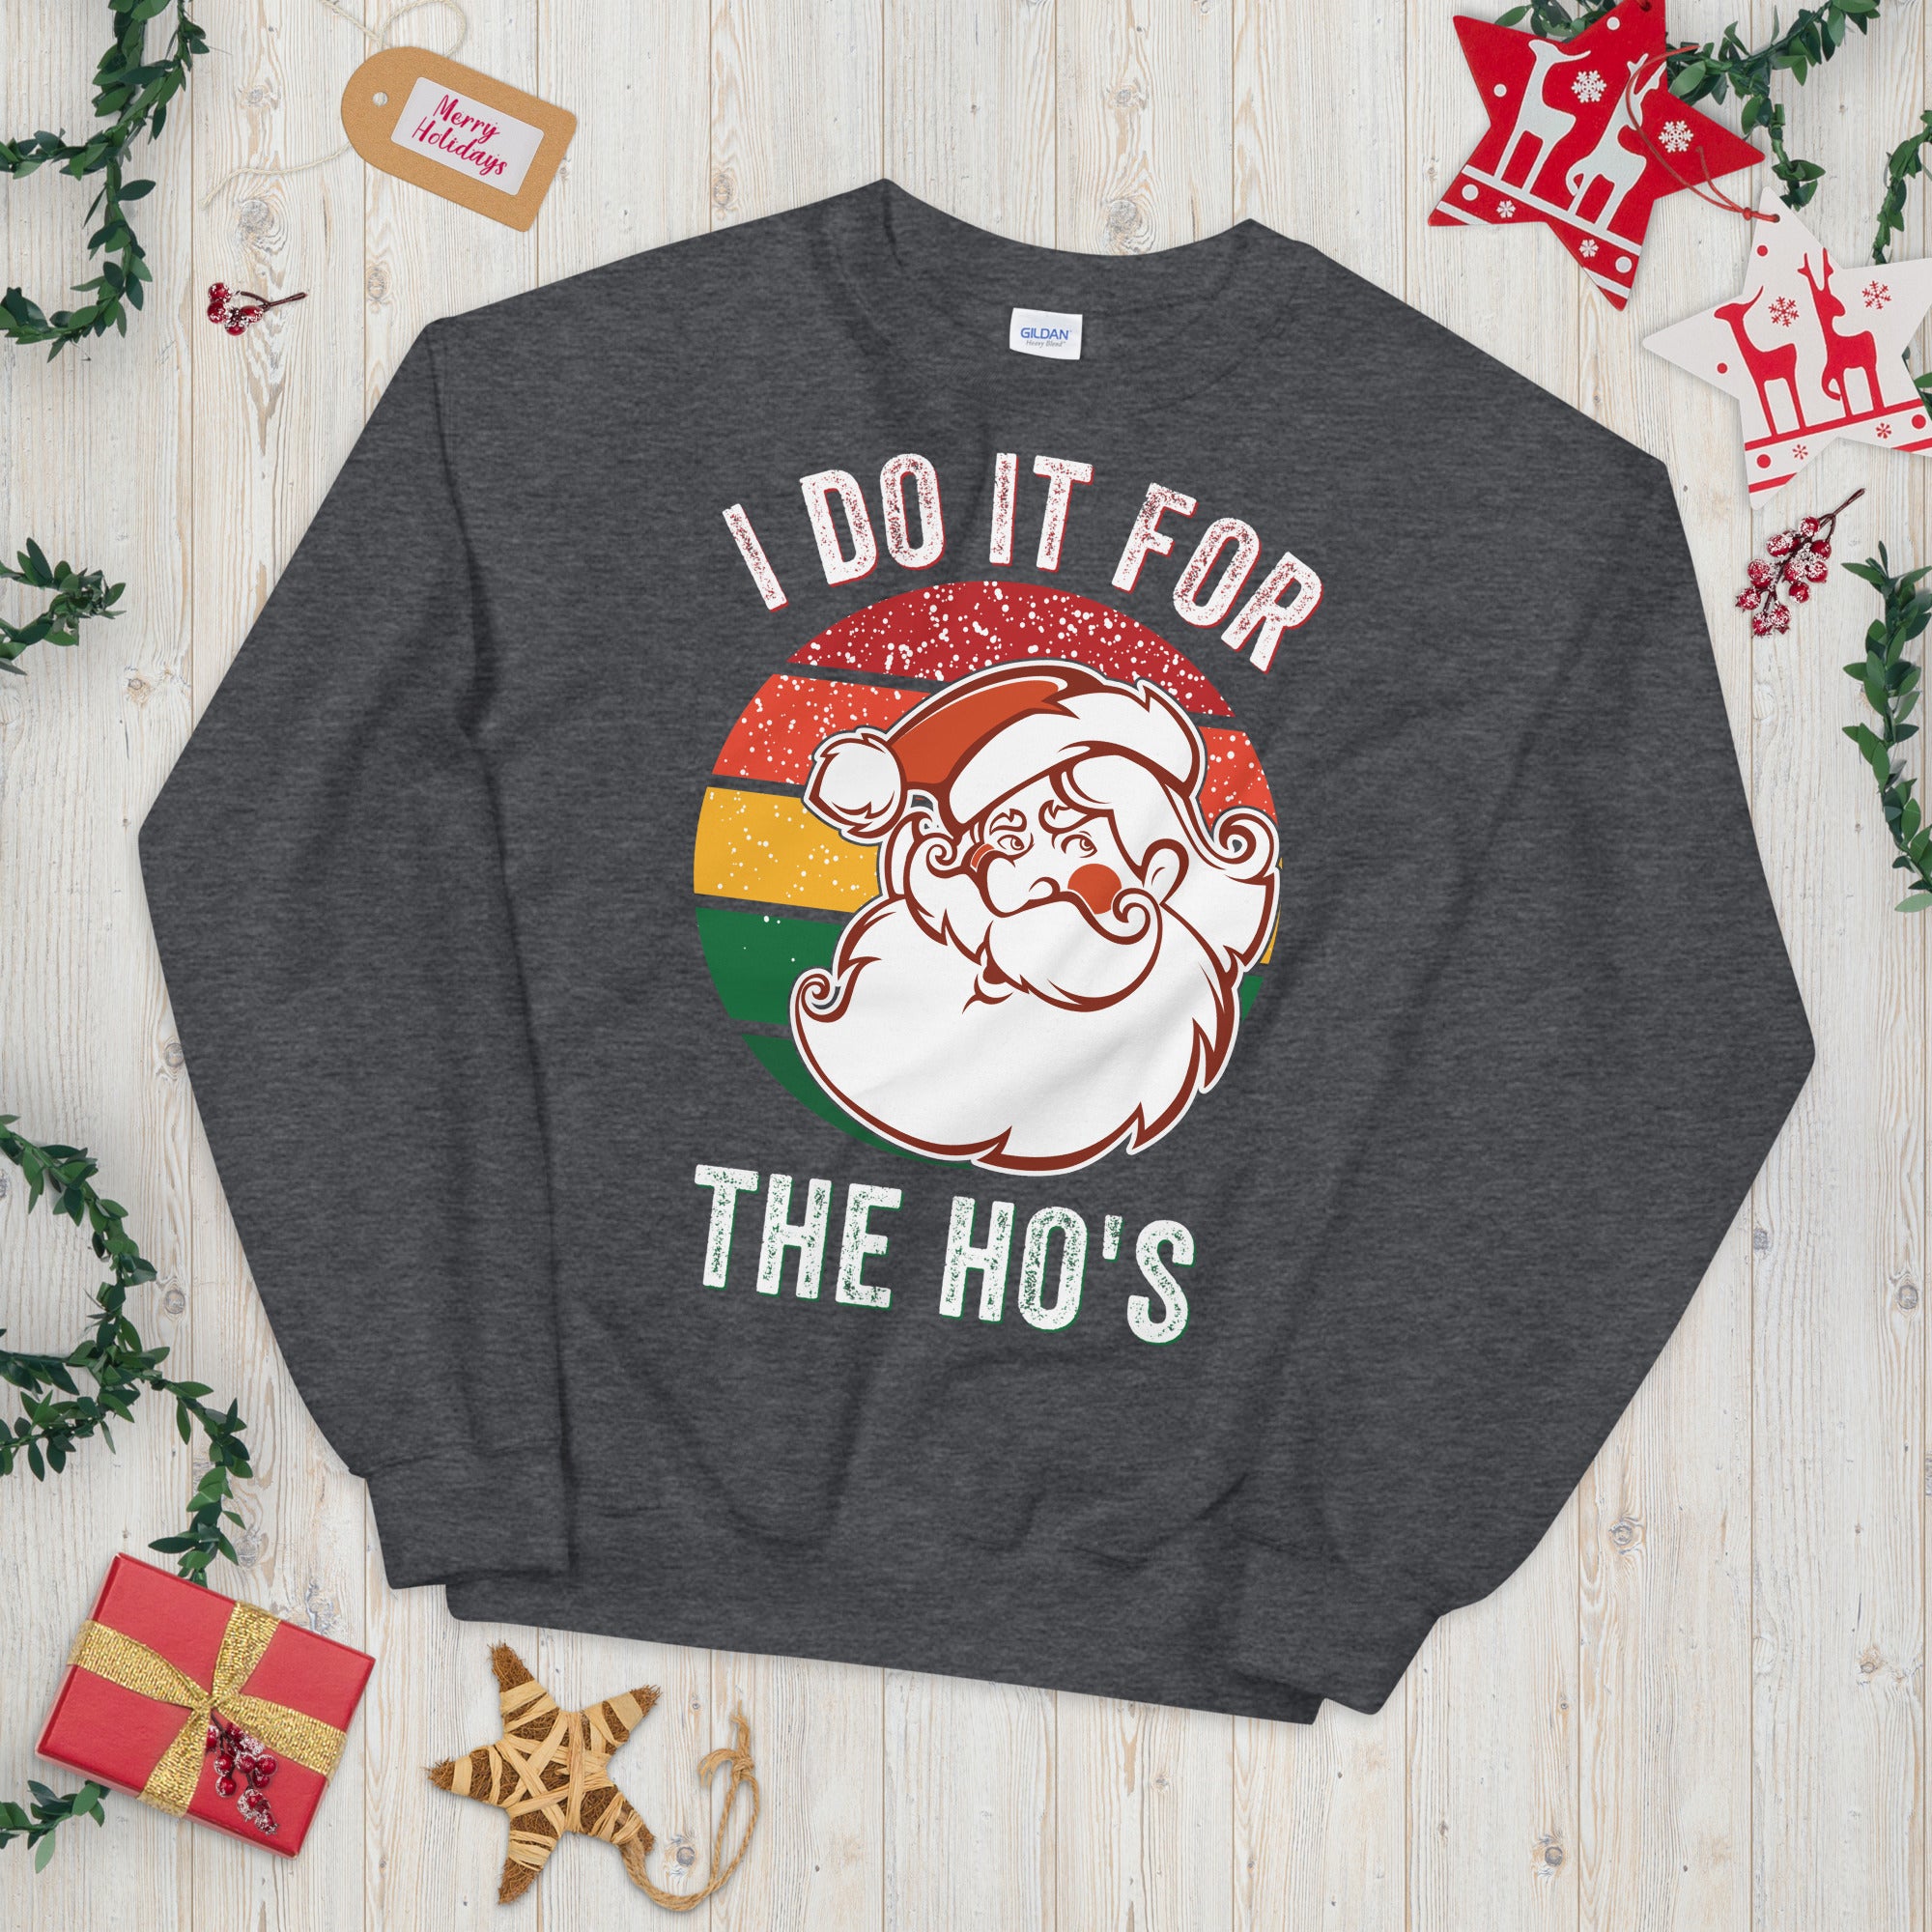 I Do It For The Hos Sweatshirt, Rude Christmas Sweater, Santa Face Shirt, Santa Face Sweatshirt, Rude Xmas Sweatshirt, Offensive Xmas Gifts